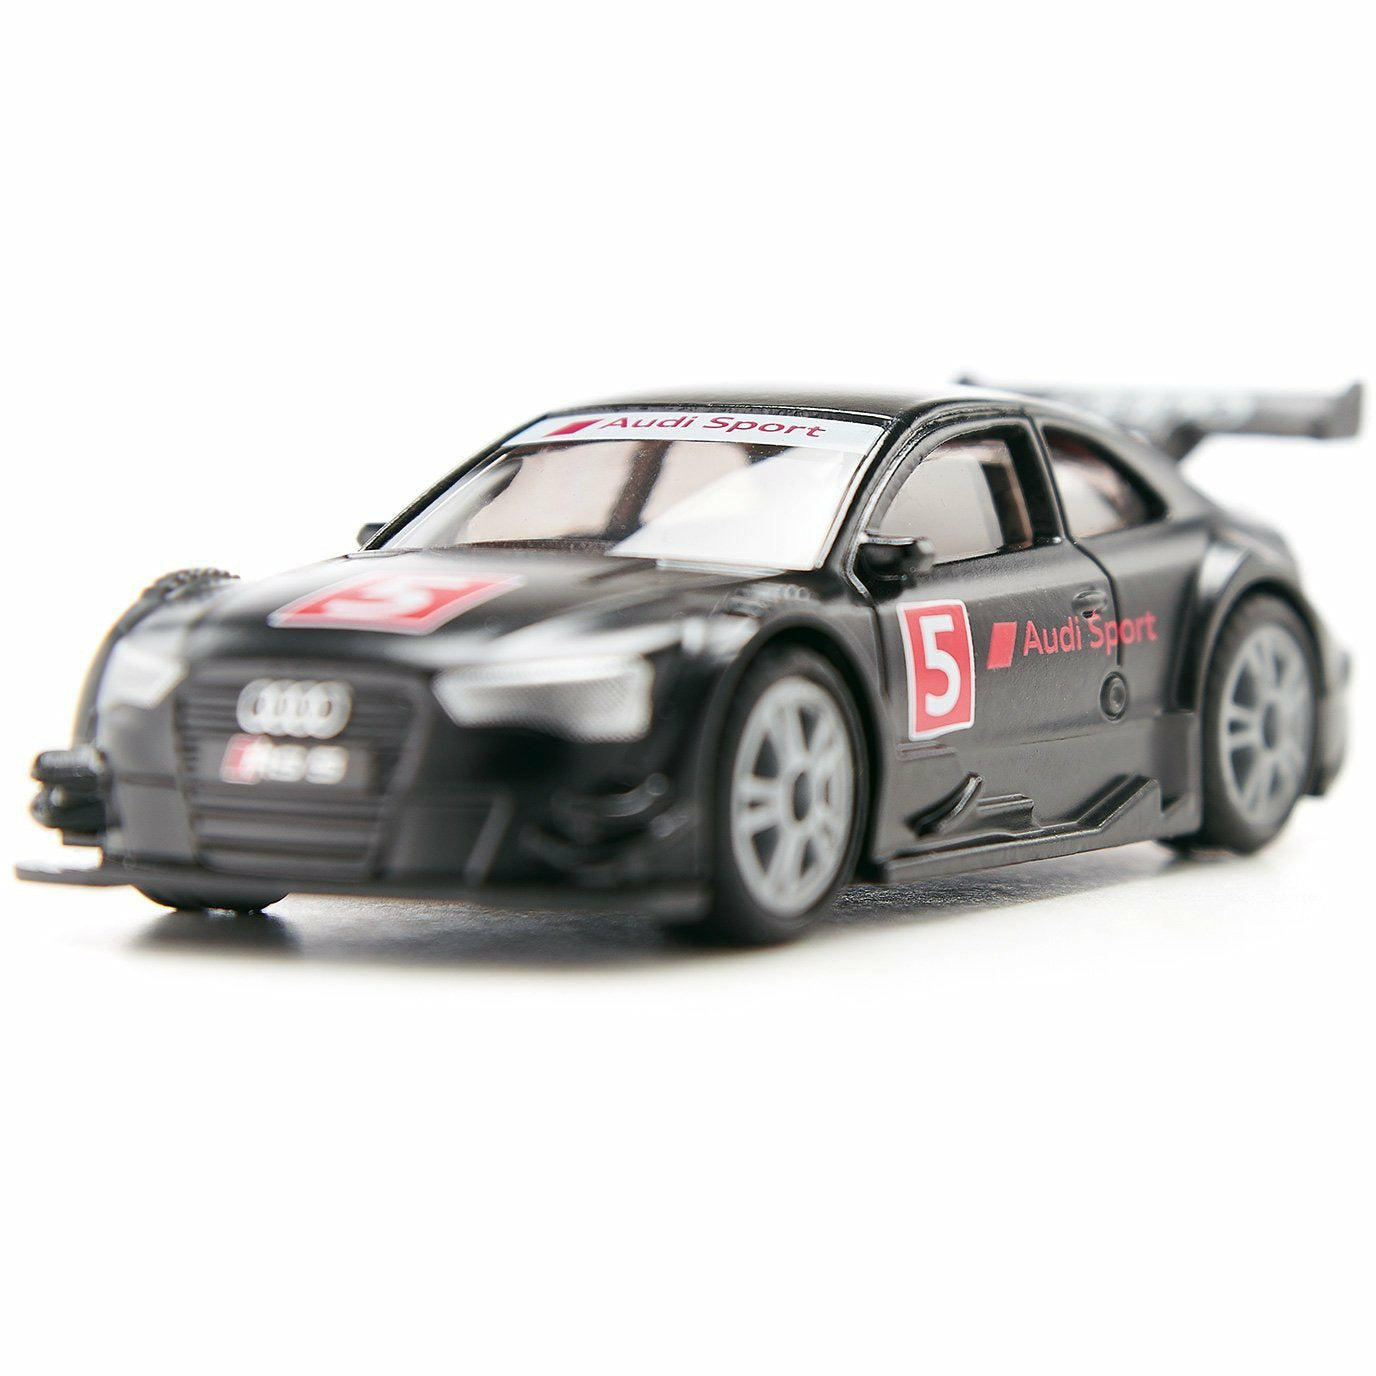 SIKU | Audi RS 5 Racing